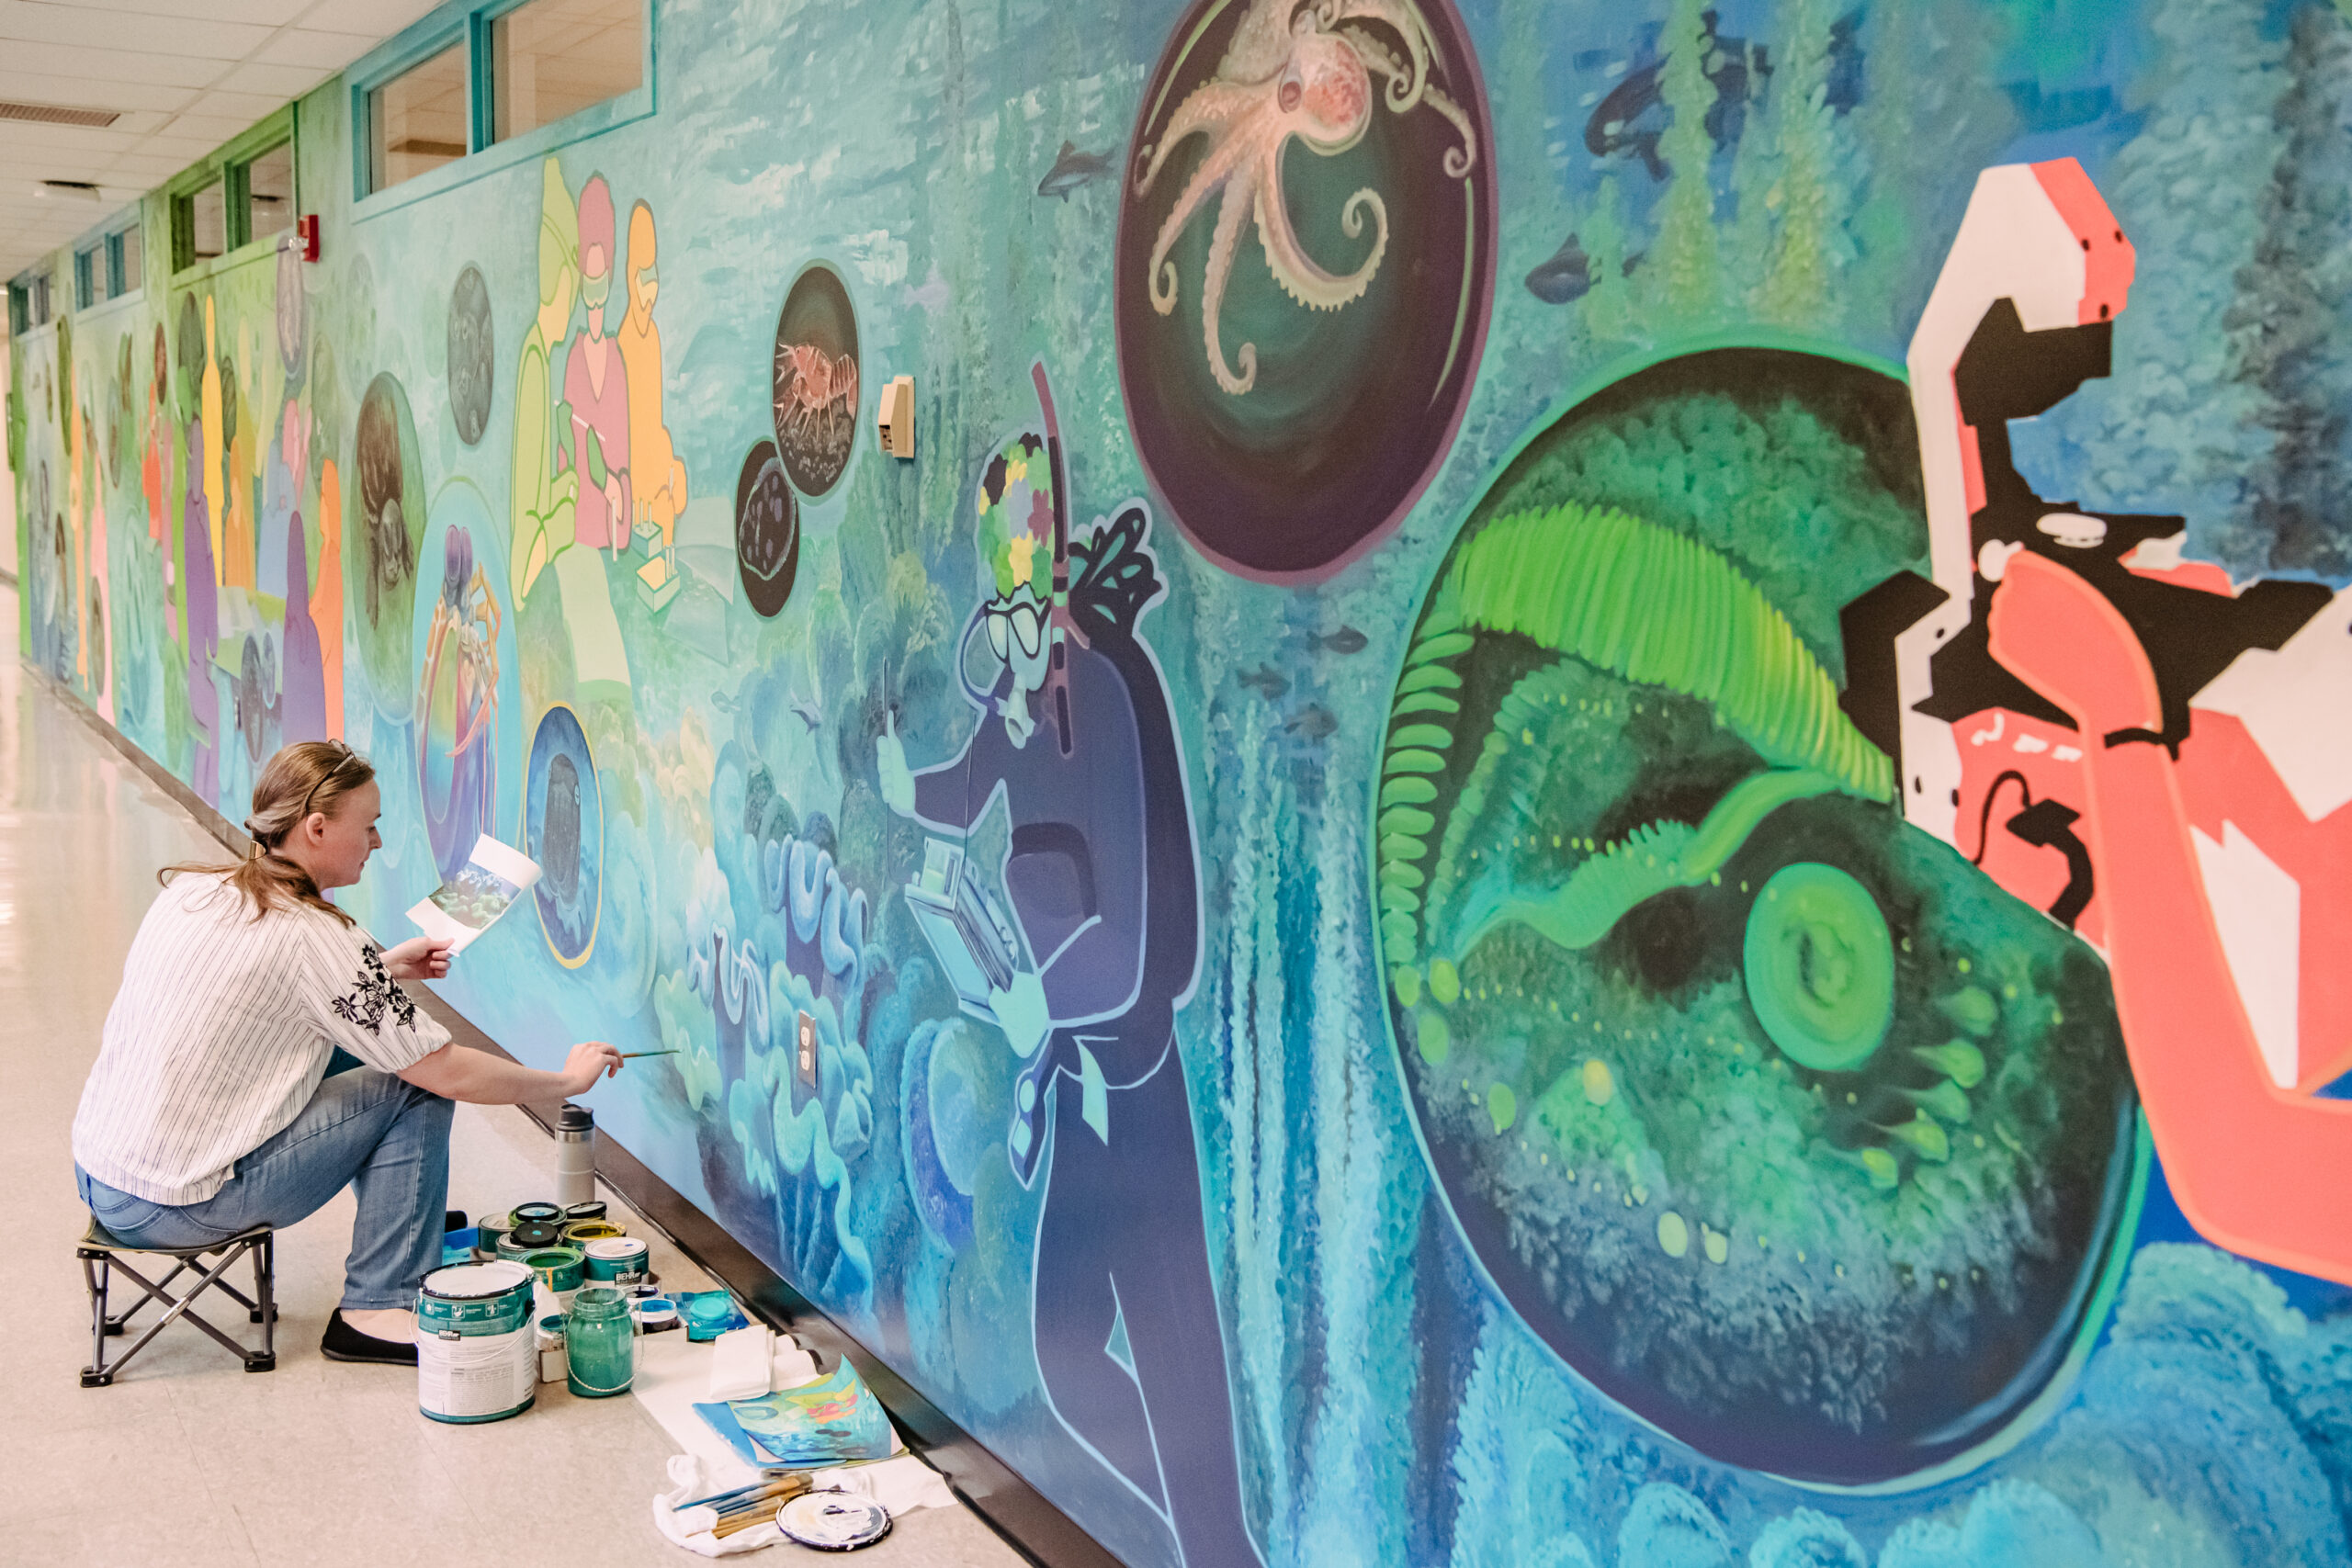 Alumna brings biology mural back to life